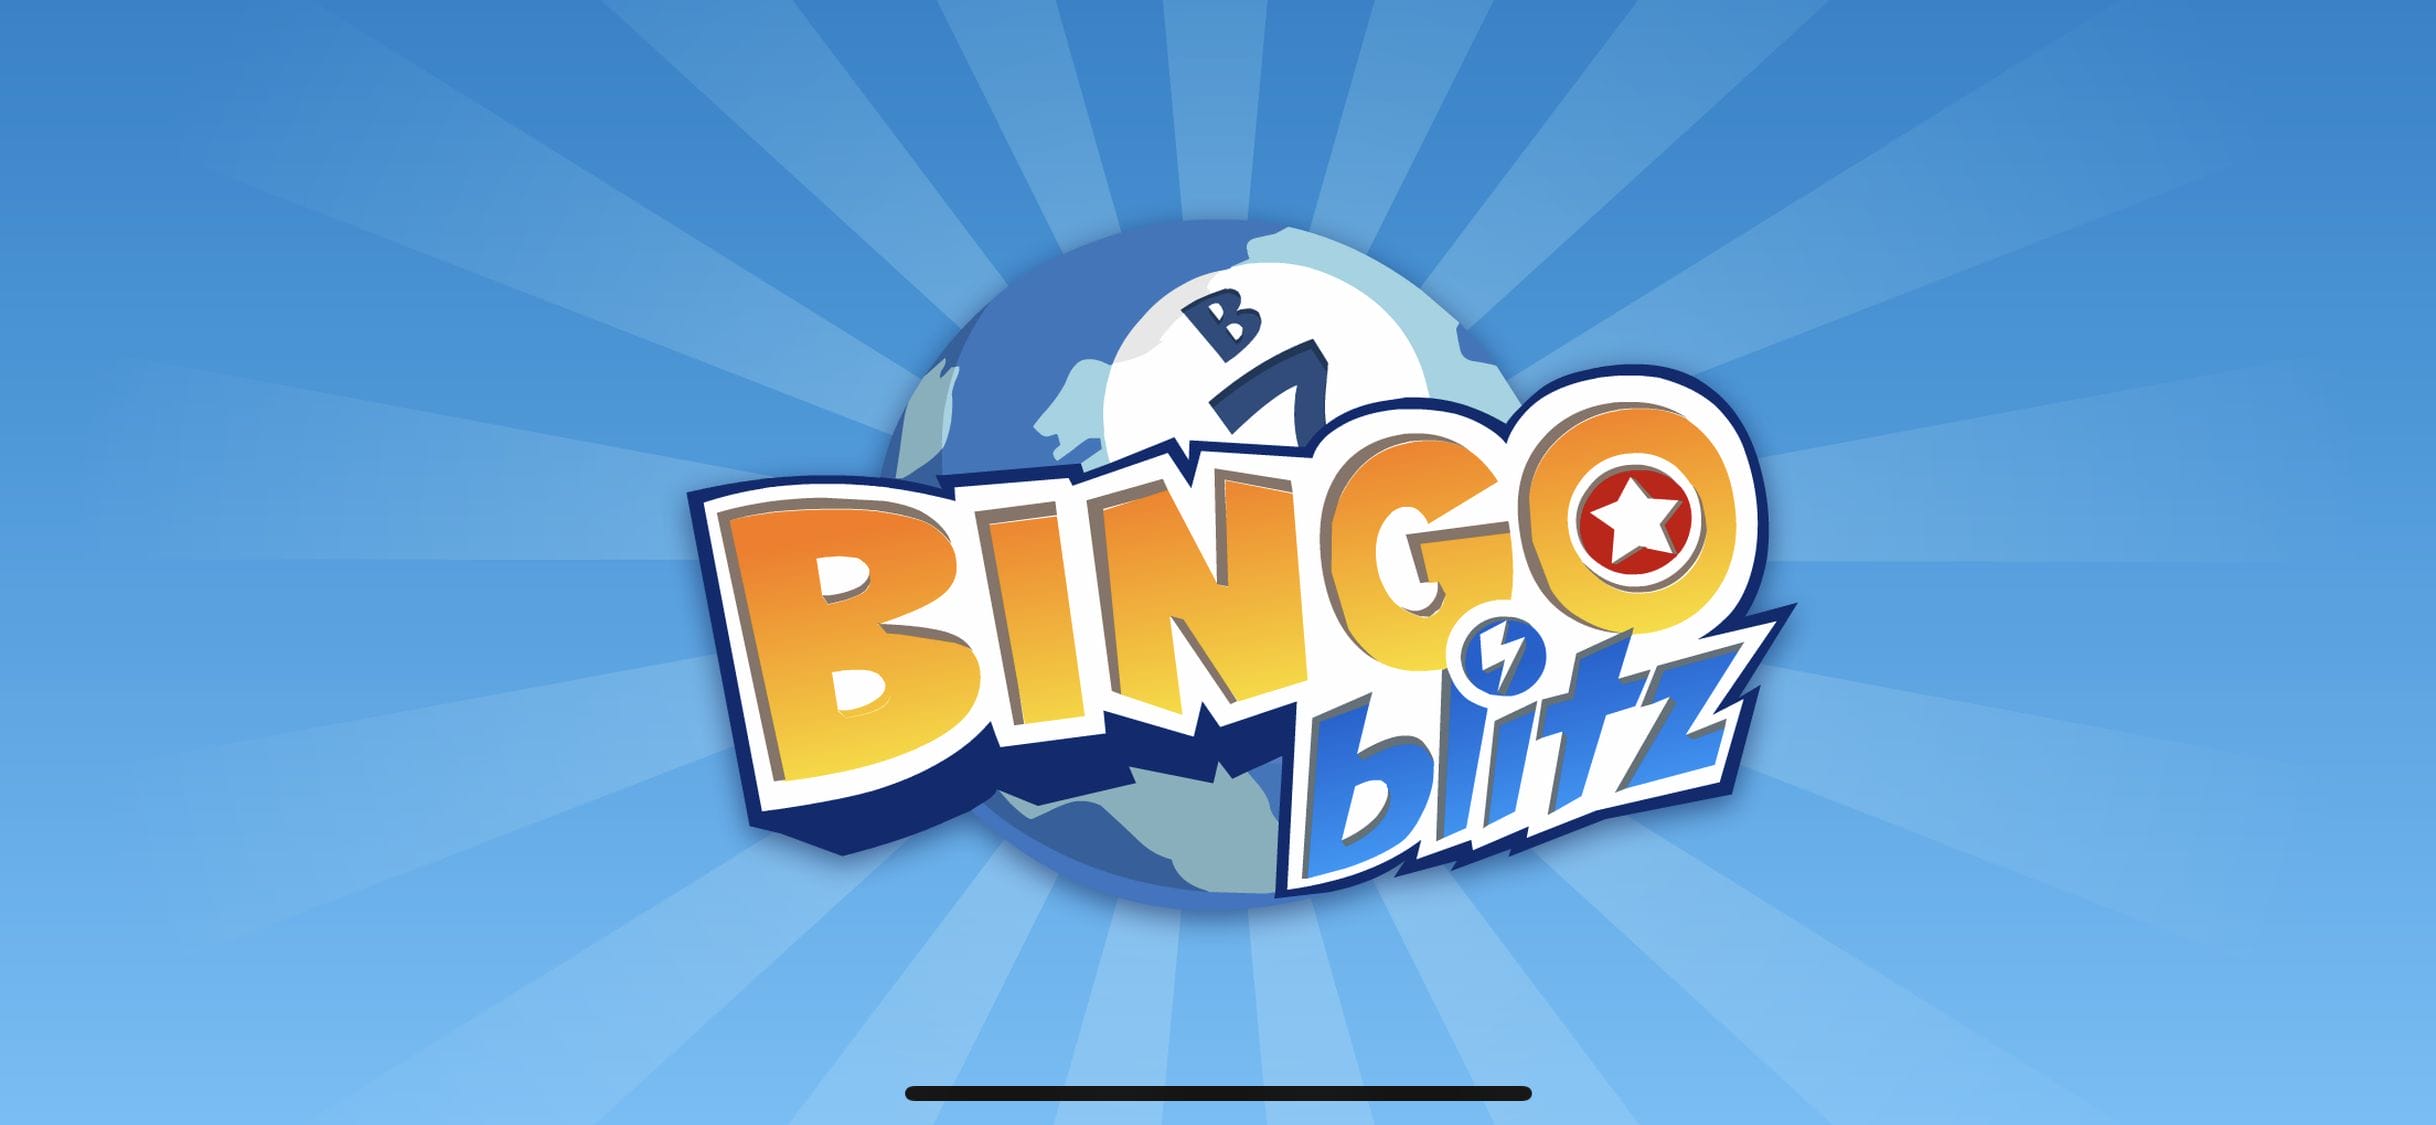 bingo blitz free credits bonuses